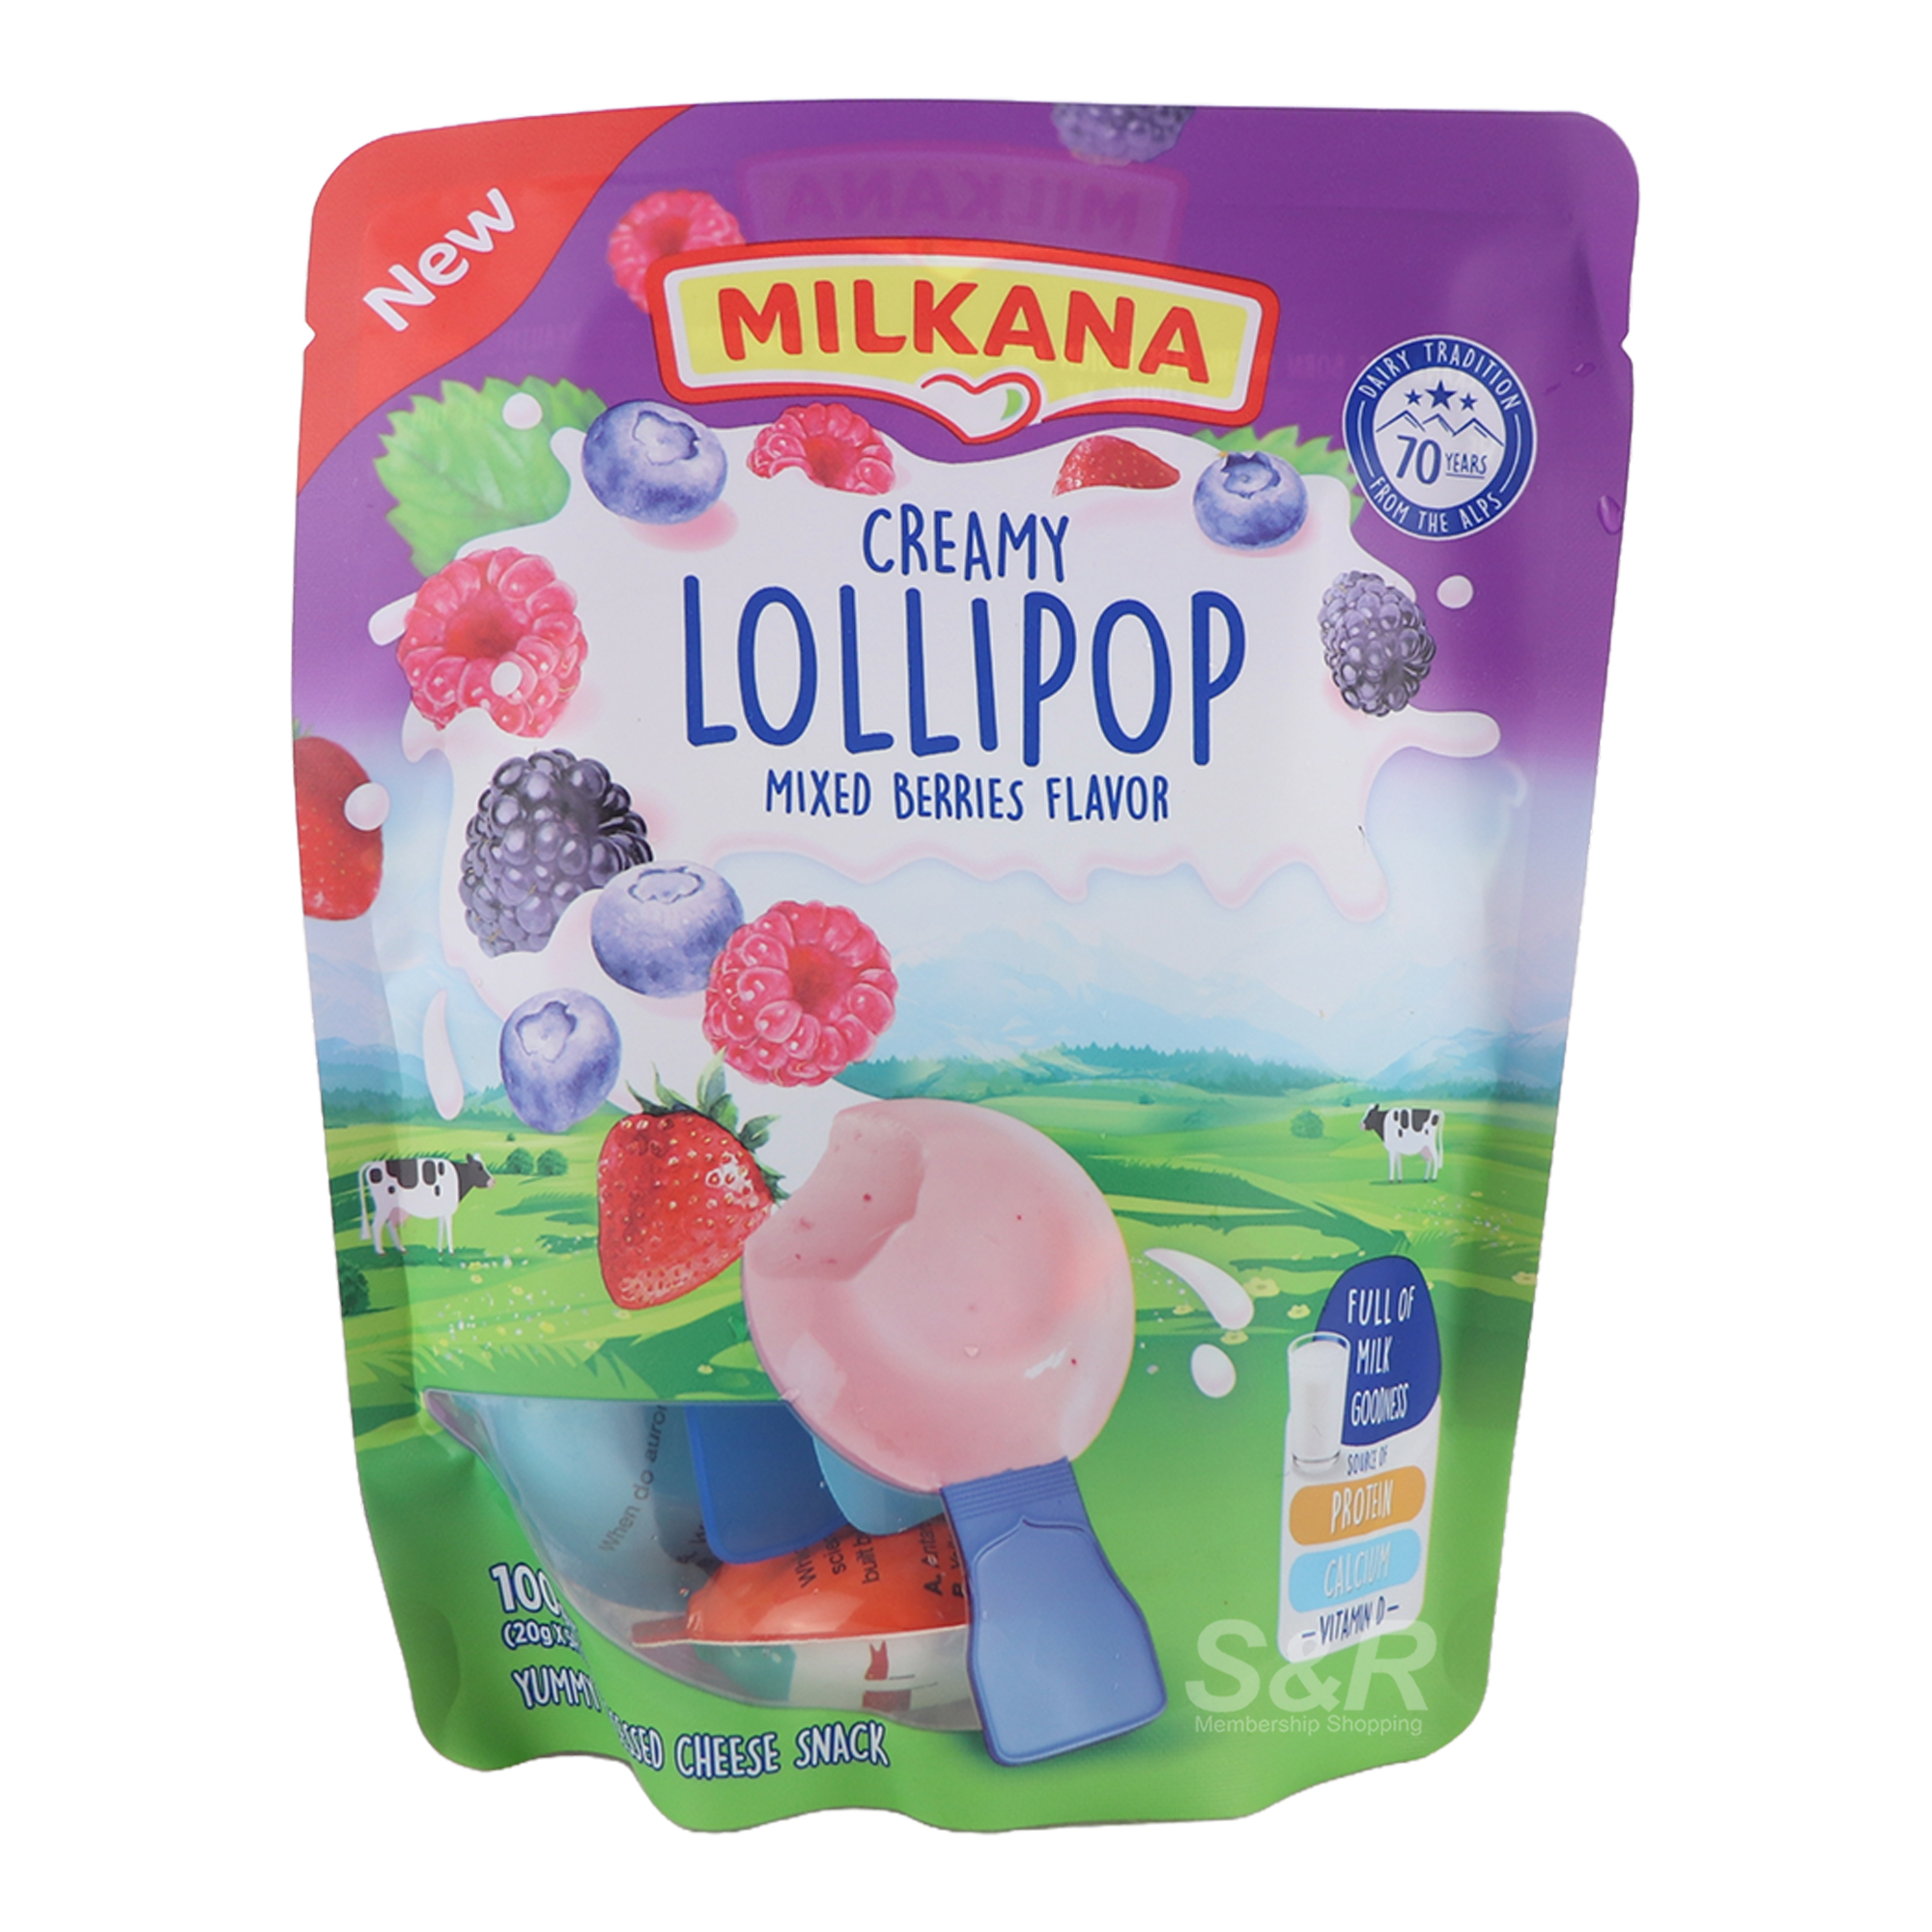 Milkana Creamy Lollipop Mixed Berries Flavors 5pcs